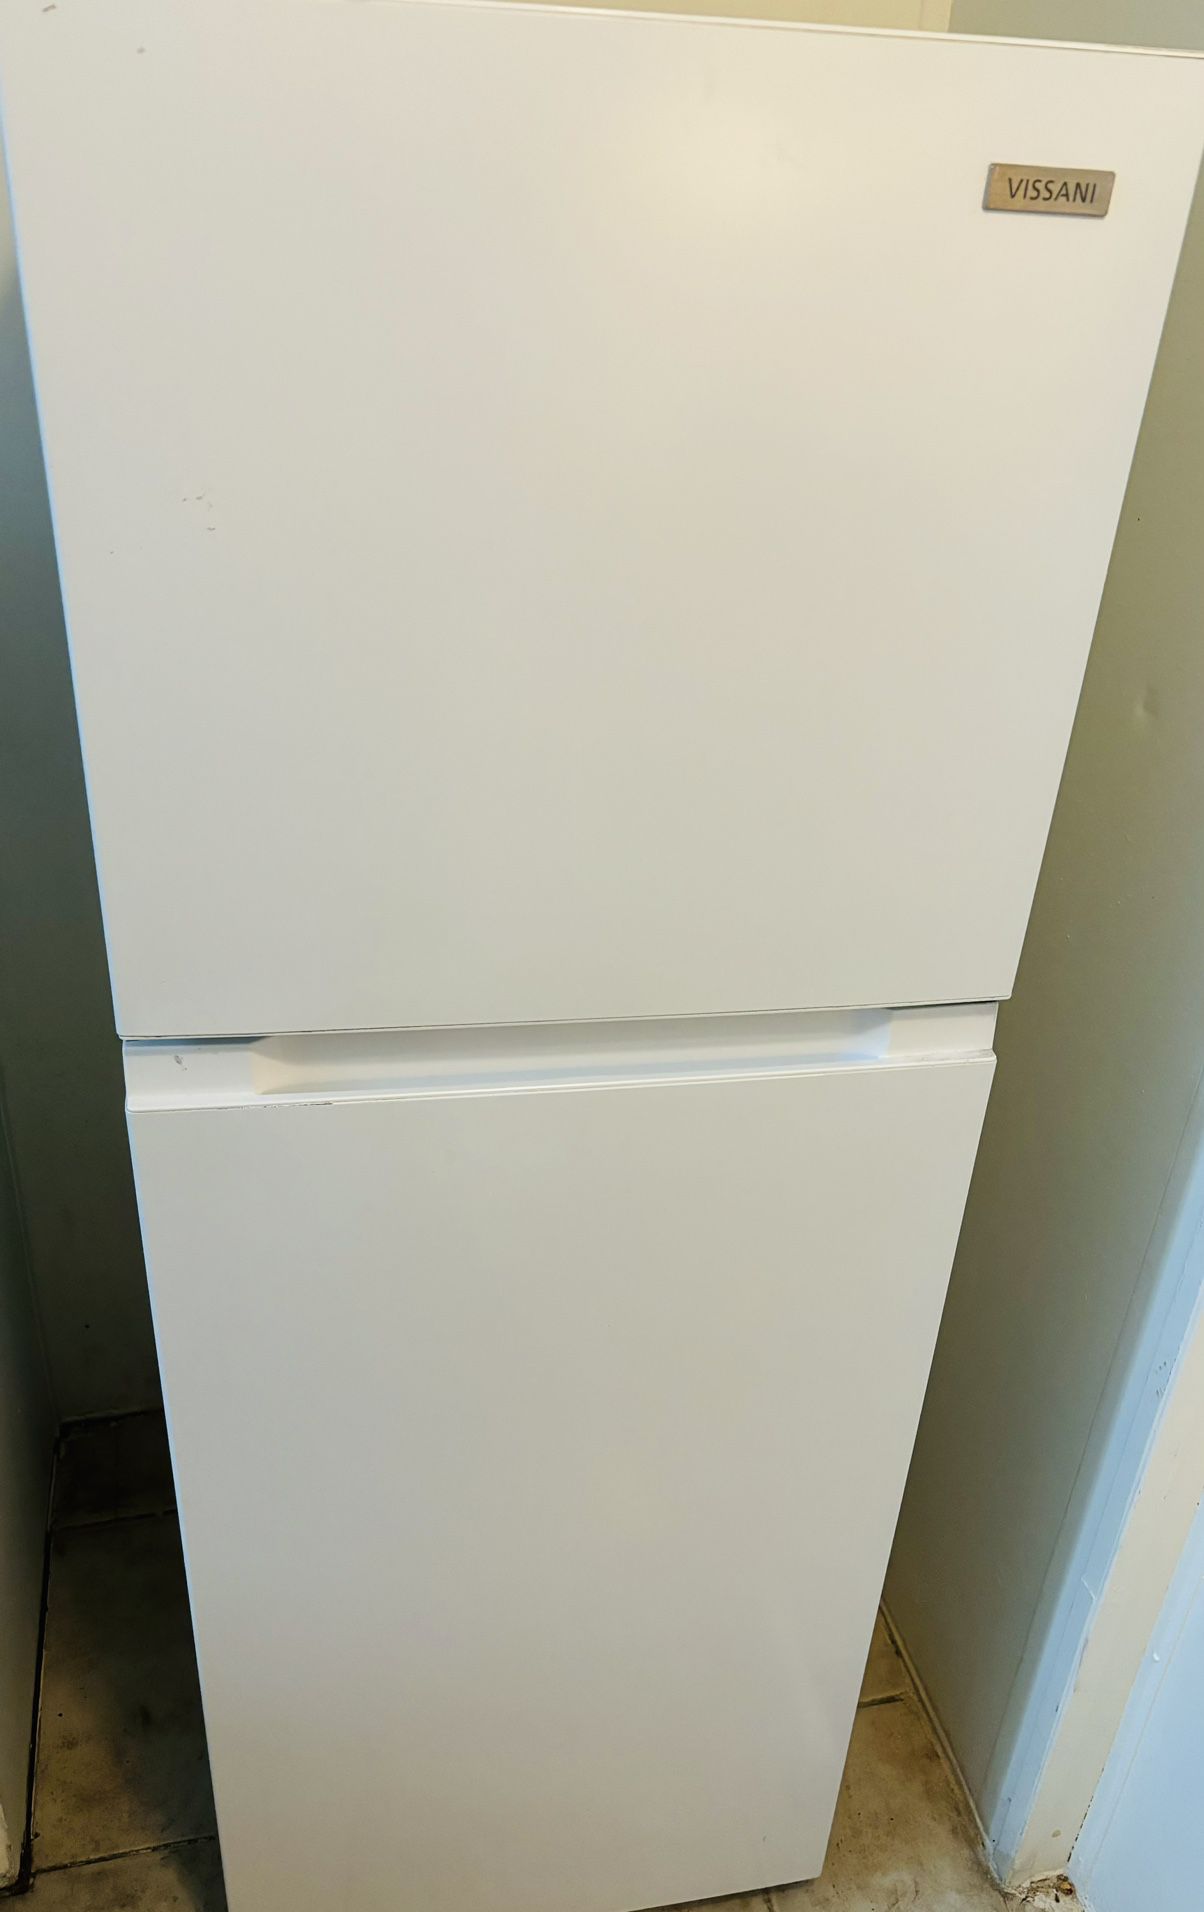  Vissani Refrigerator 